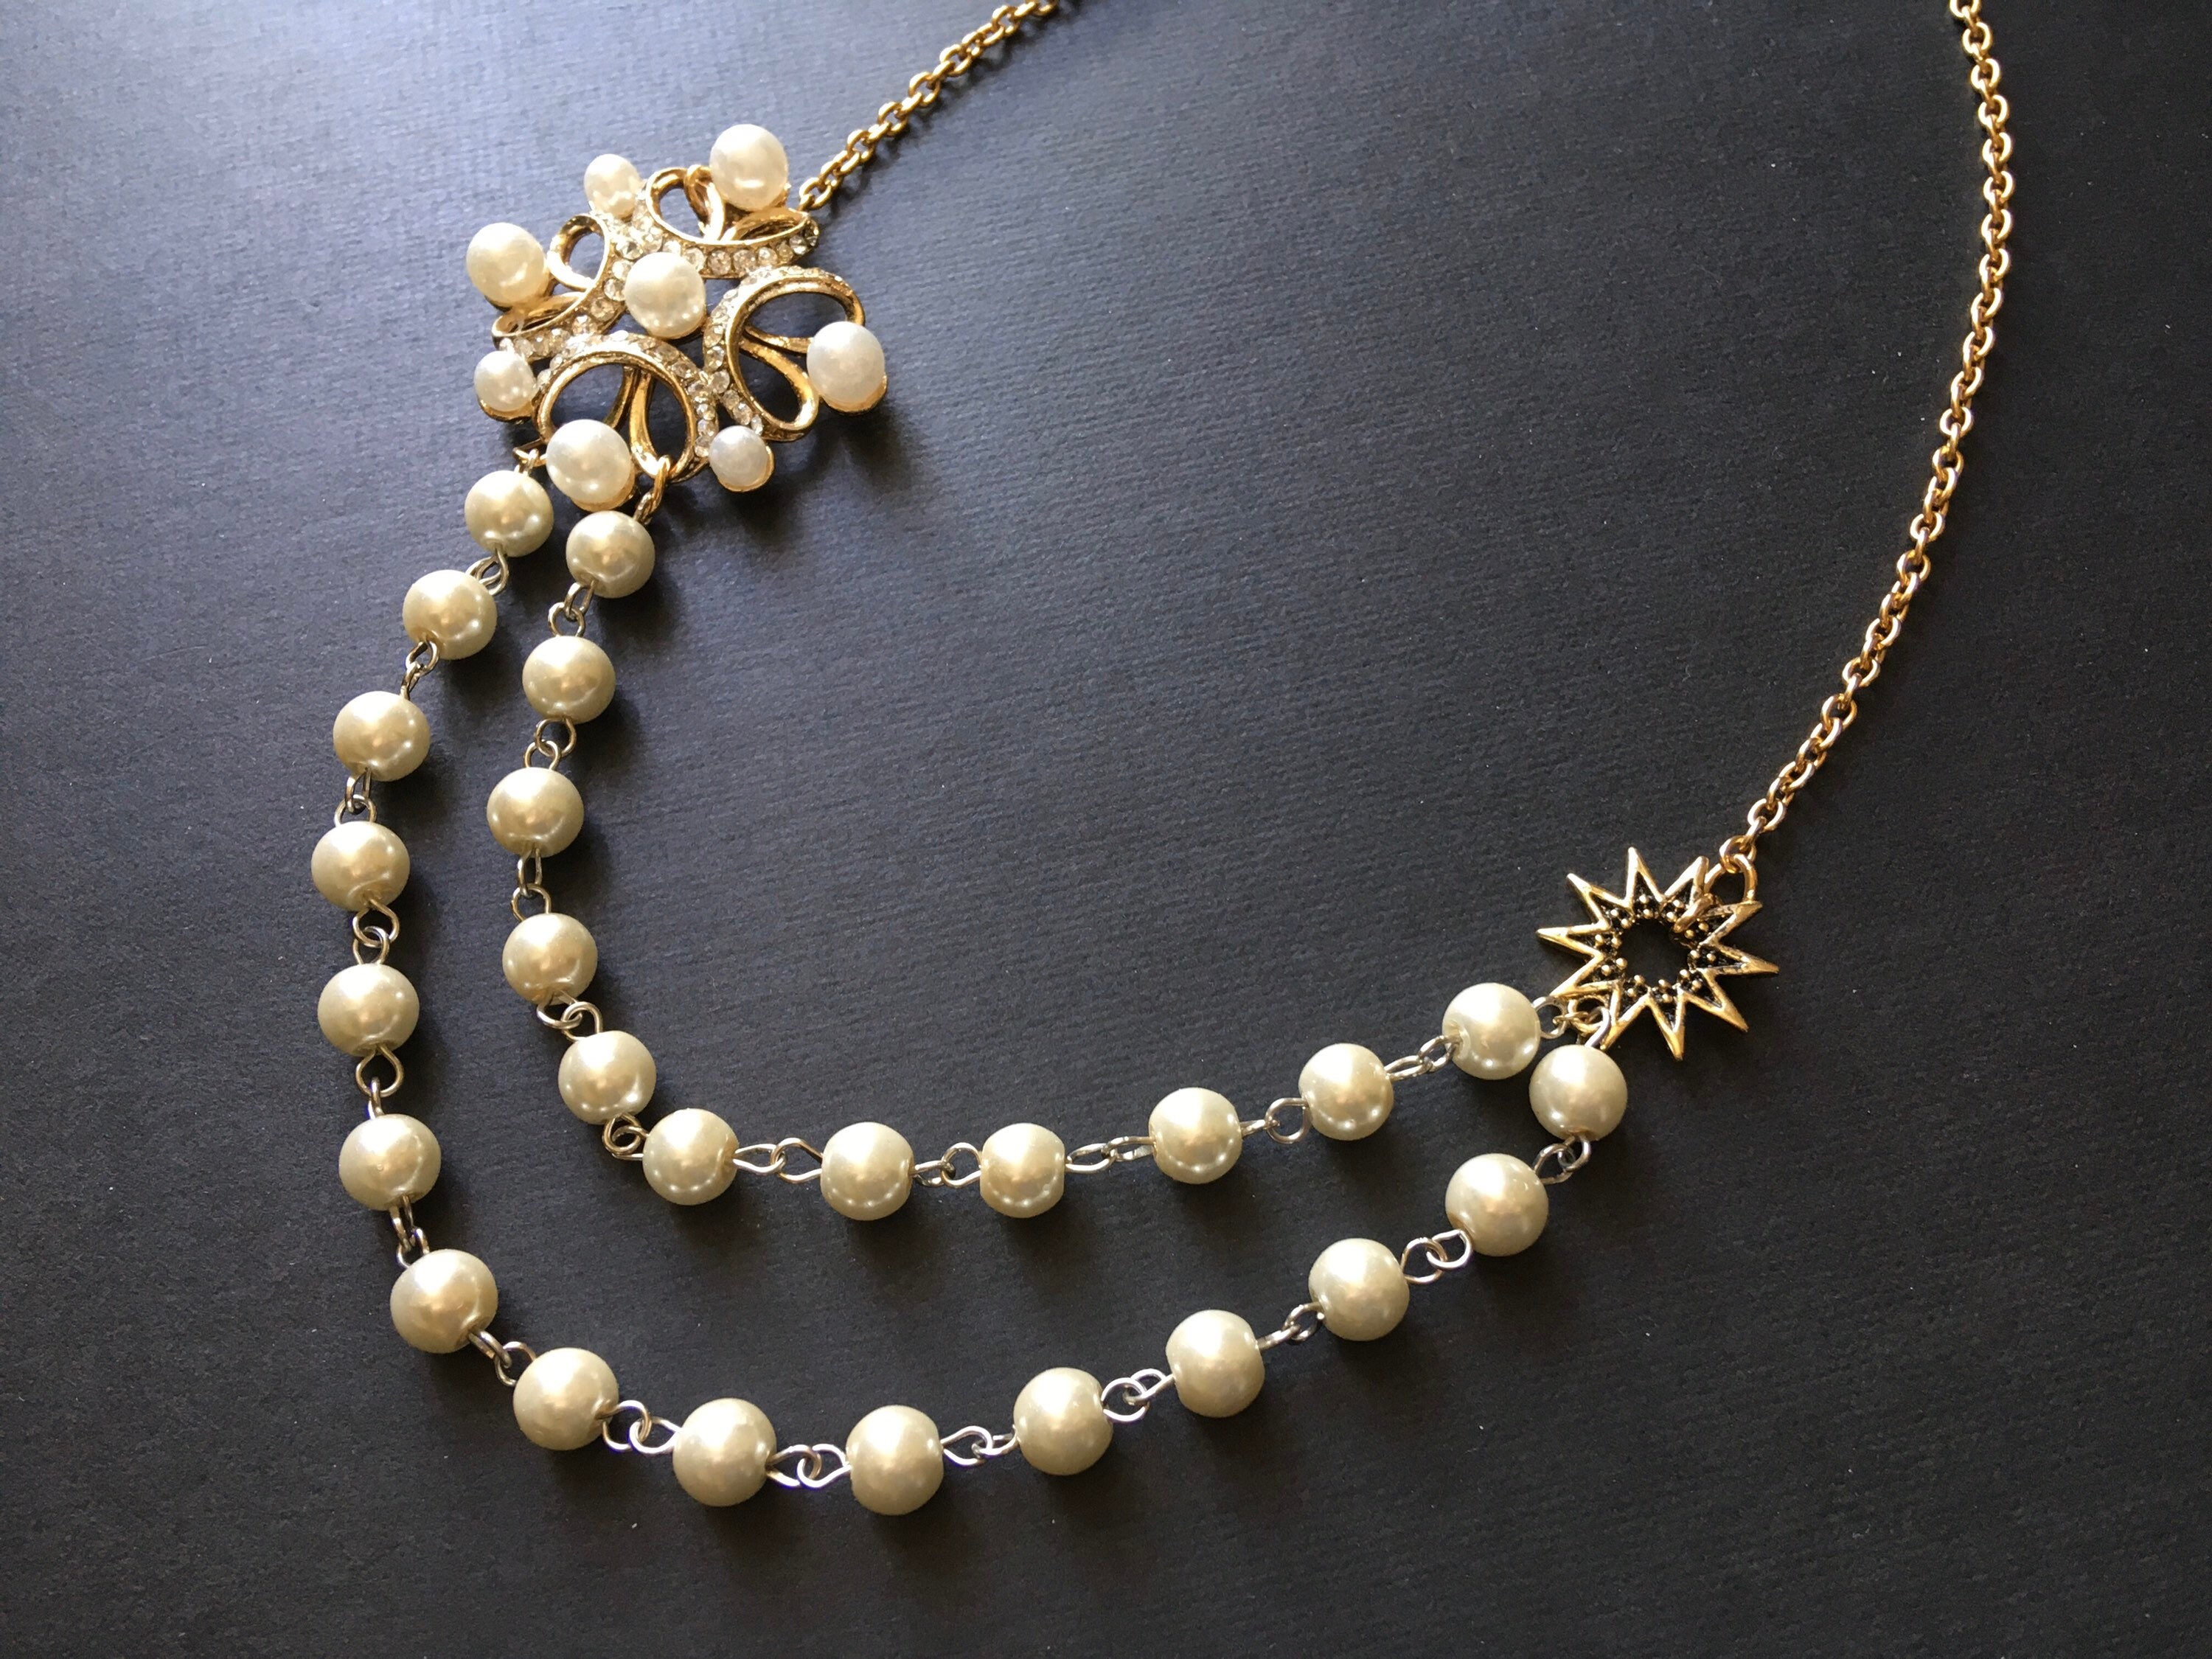 Bridal necklace gold necklace rhinestone necklace crystal | Etsy